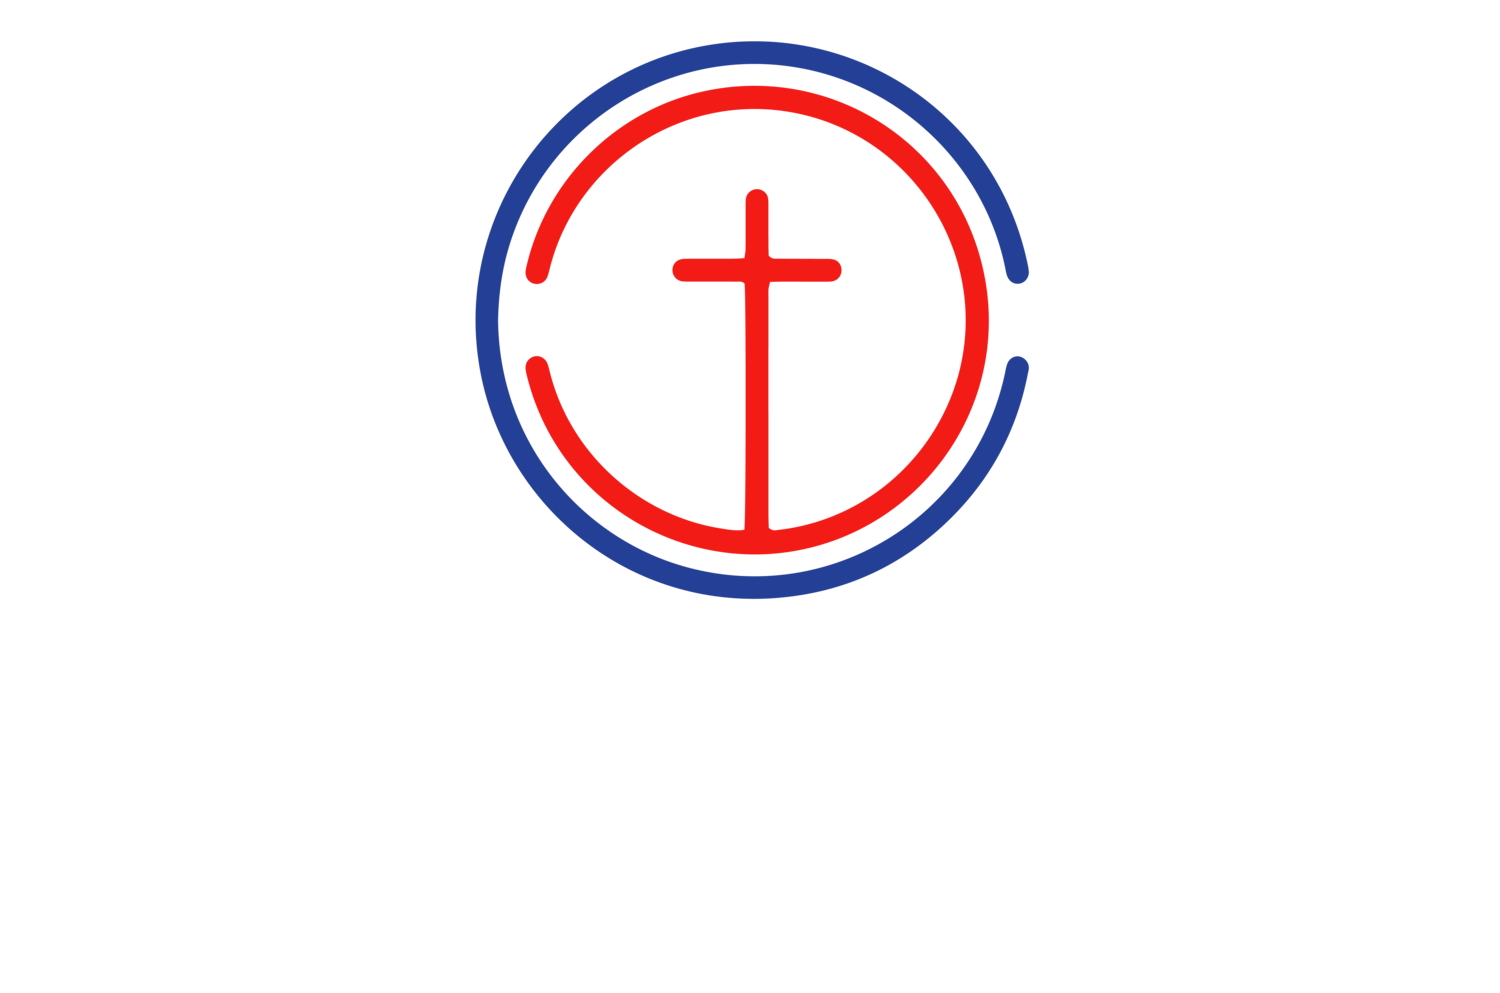 Calvary Chapel International Worship Center